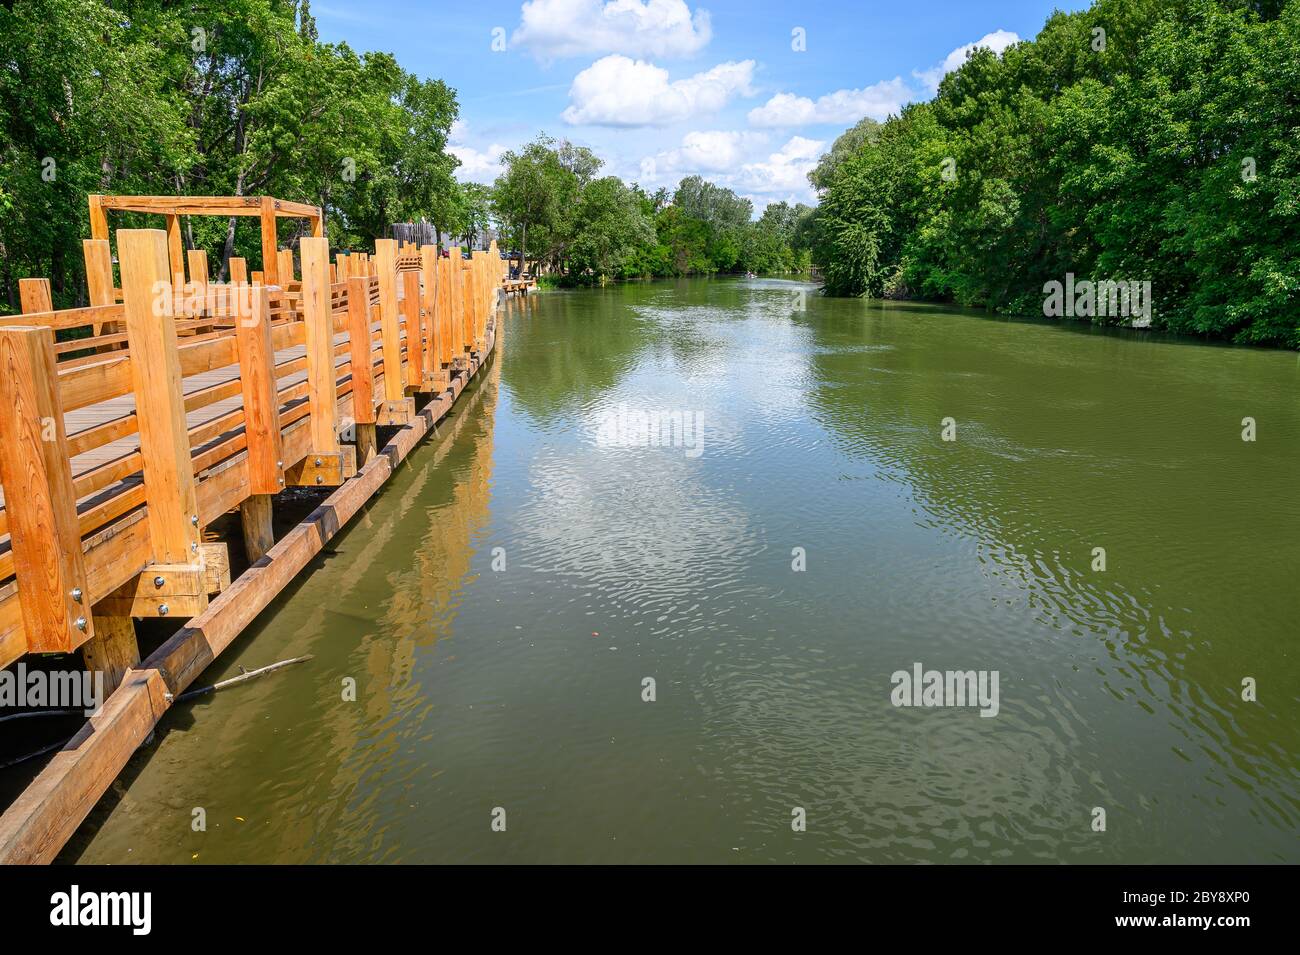 Korzo Zalesie - area for leisure activities with wooden bridge walk by Little Danube river in village of Zalesie (SLOVAKIA) Stock Photo